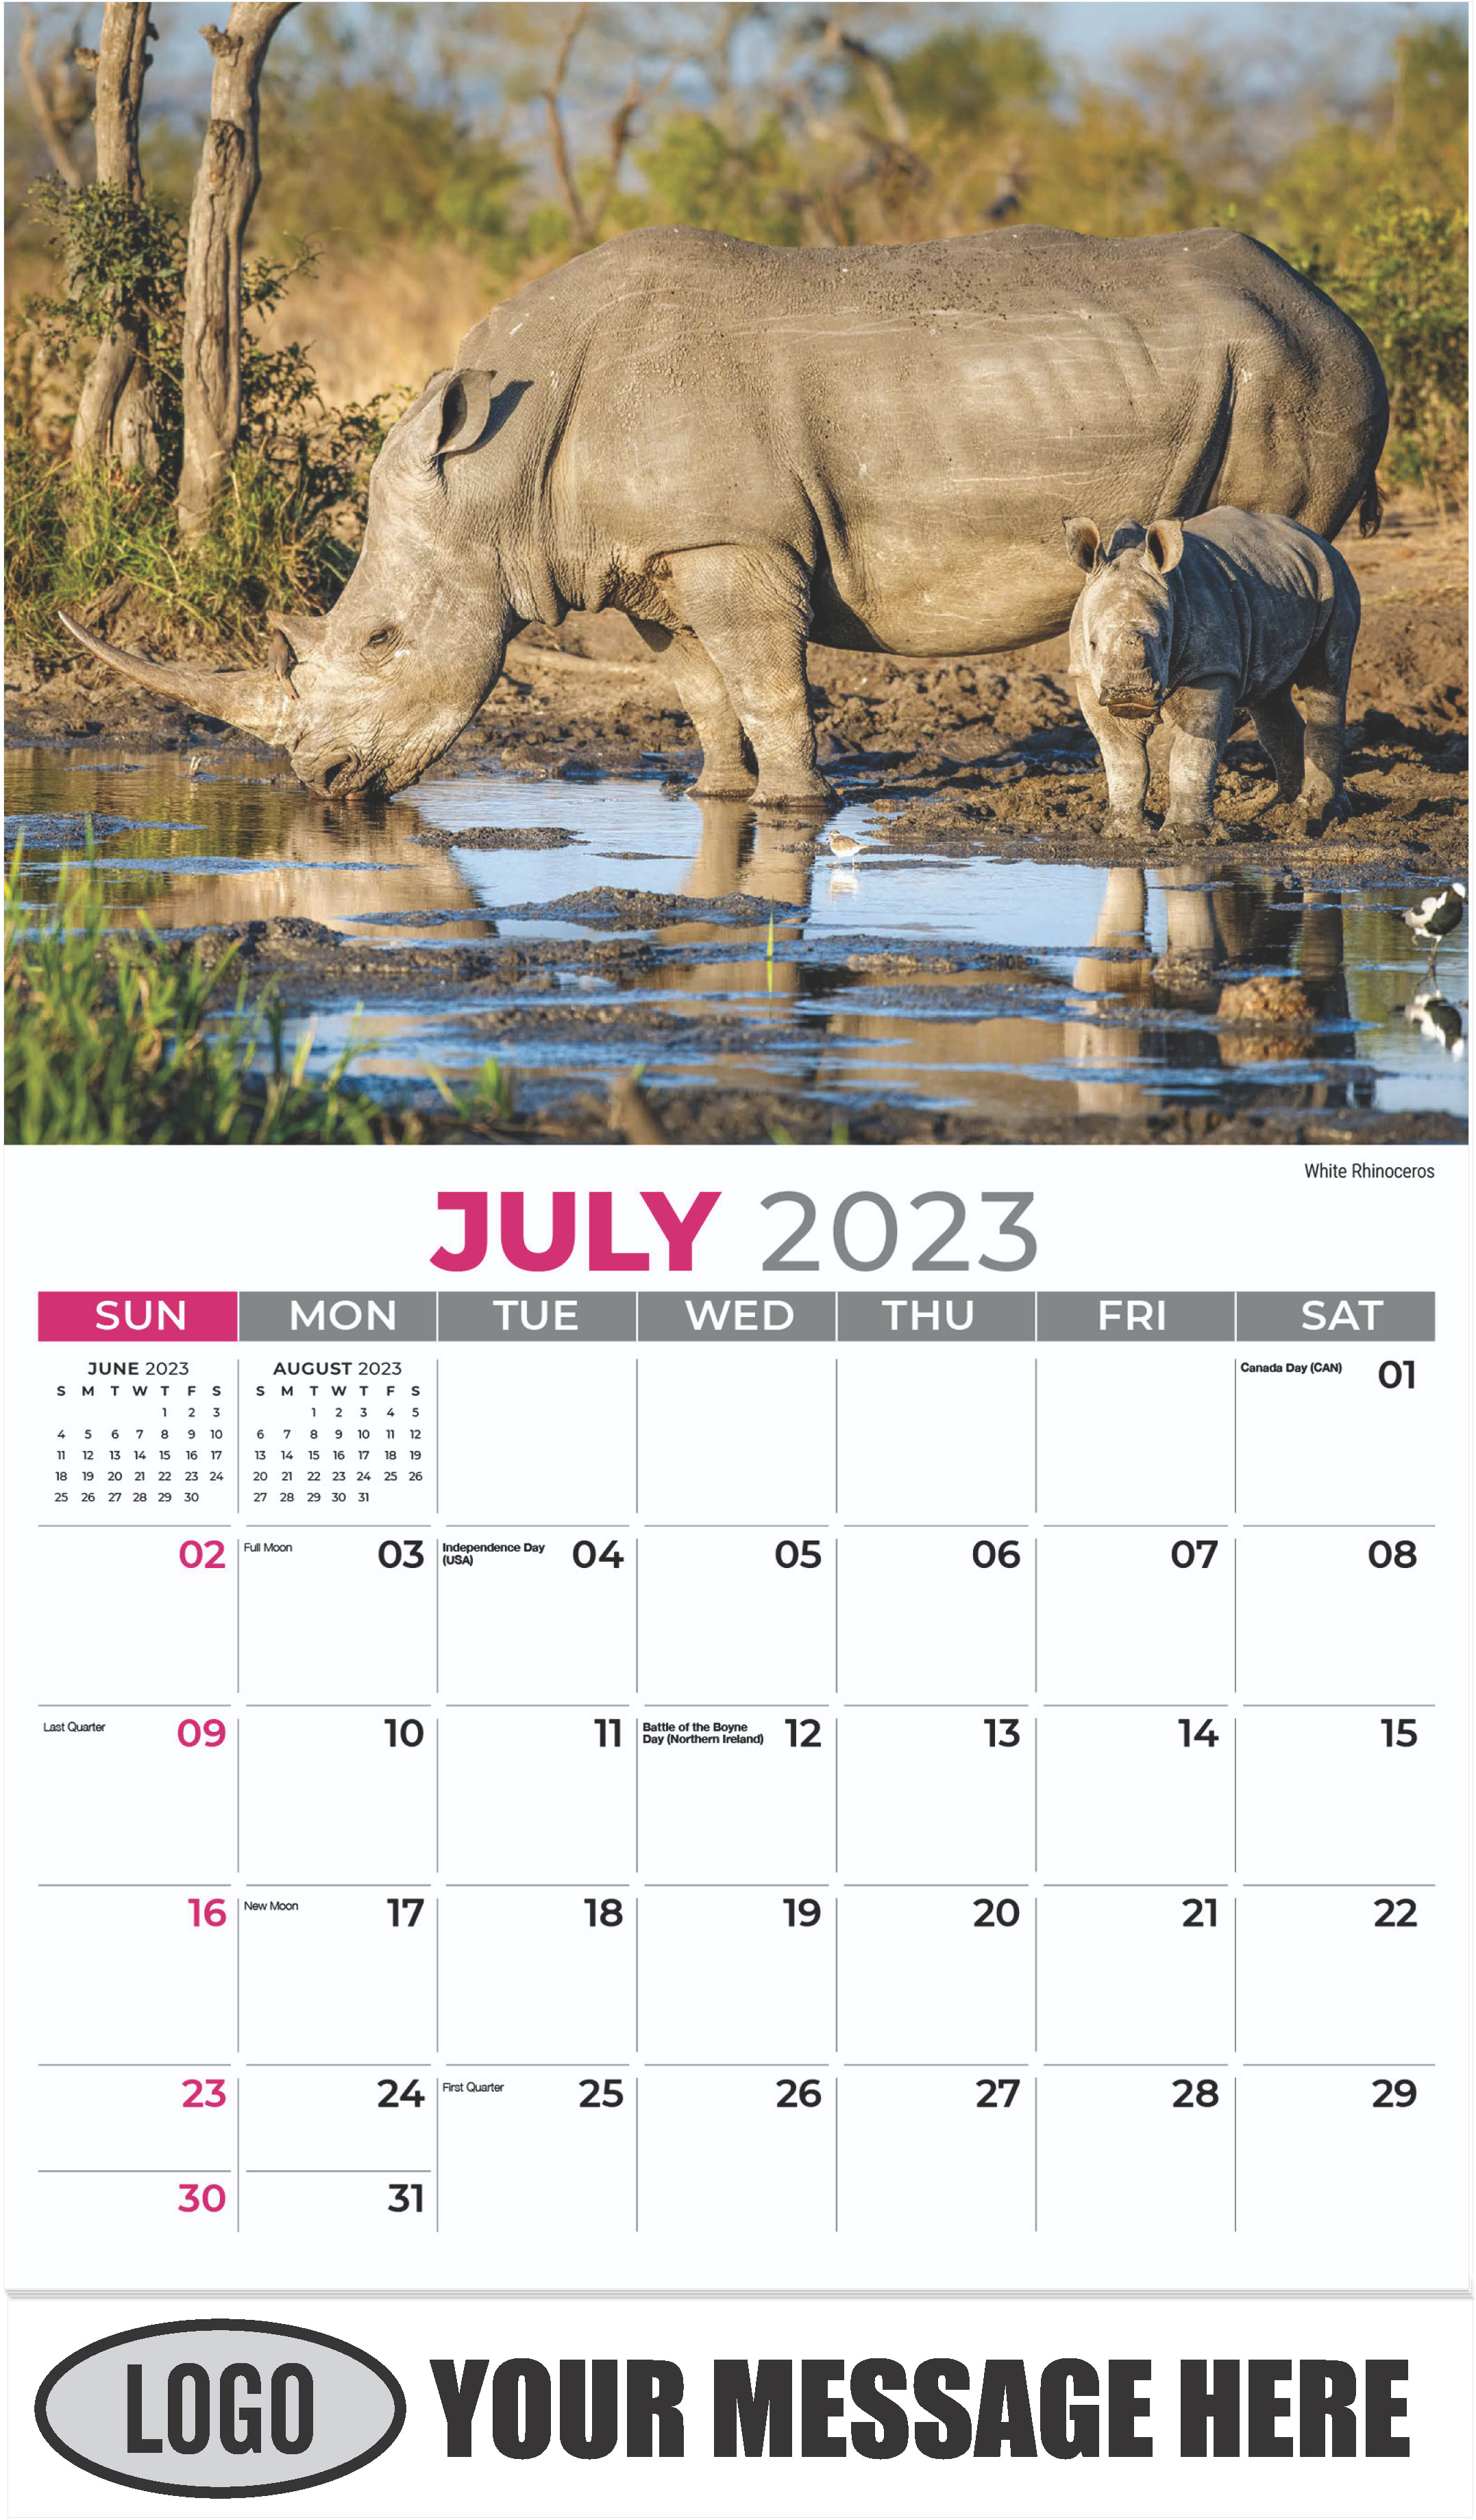 White Rhinoceros - July - International Wildlife 2023 Promotional Calendar